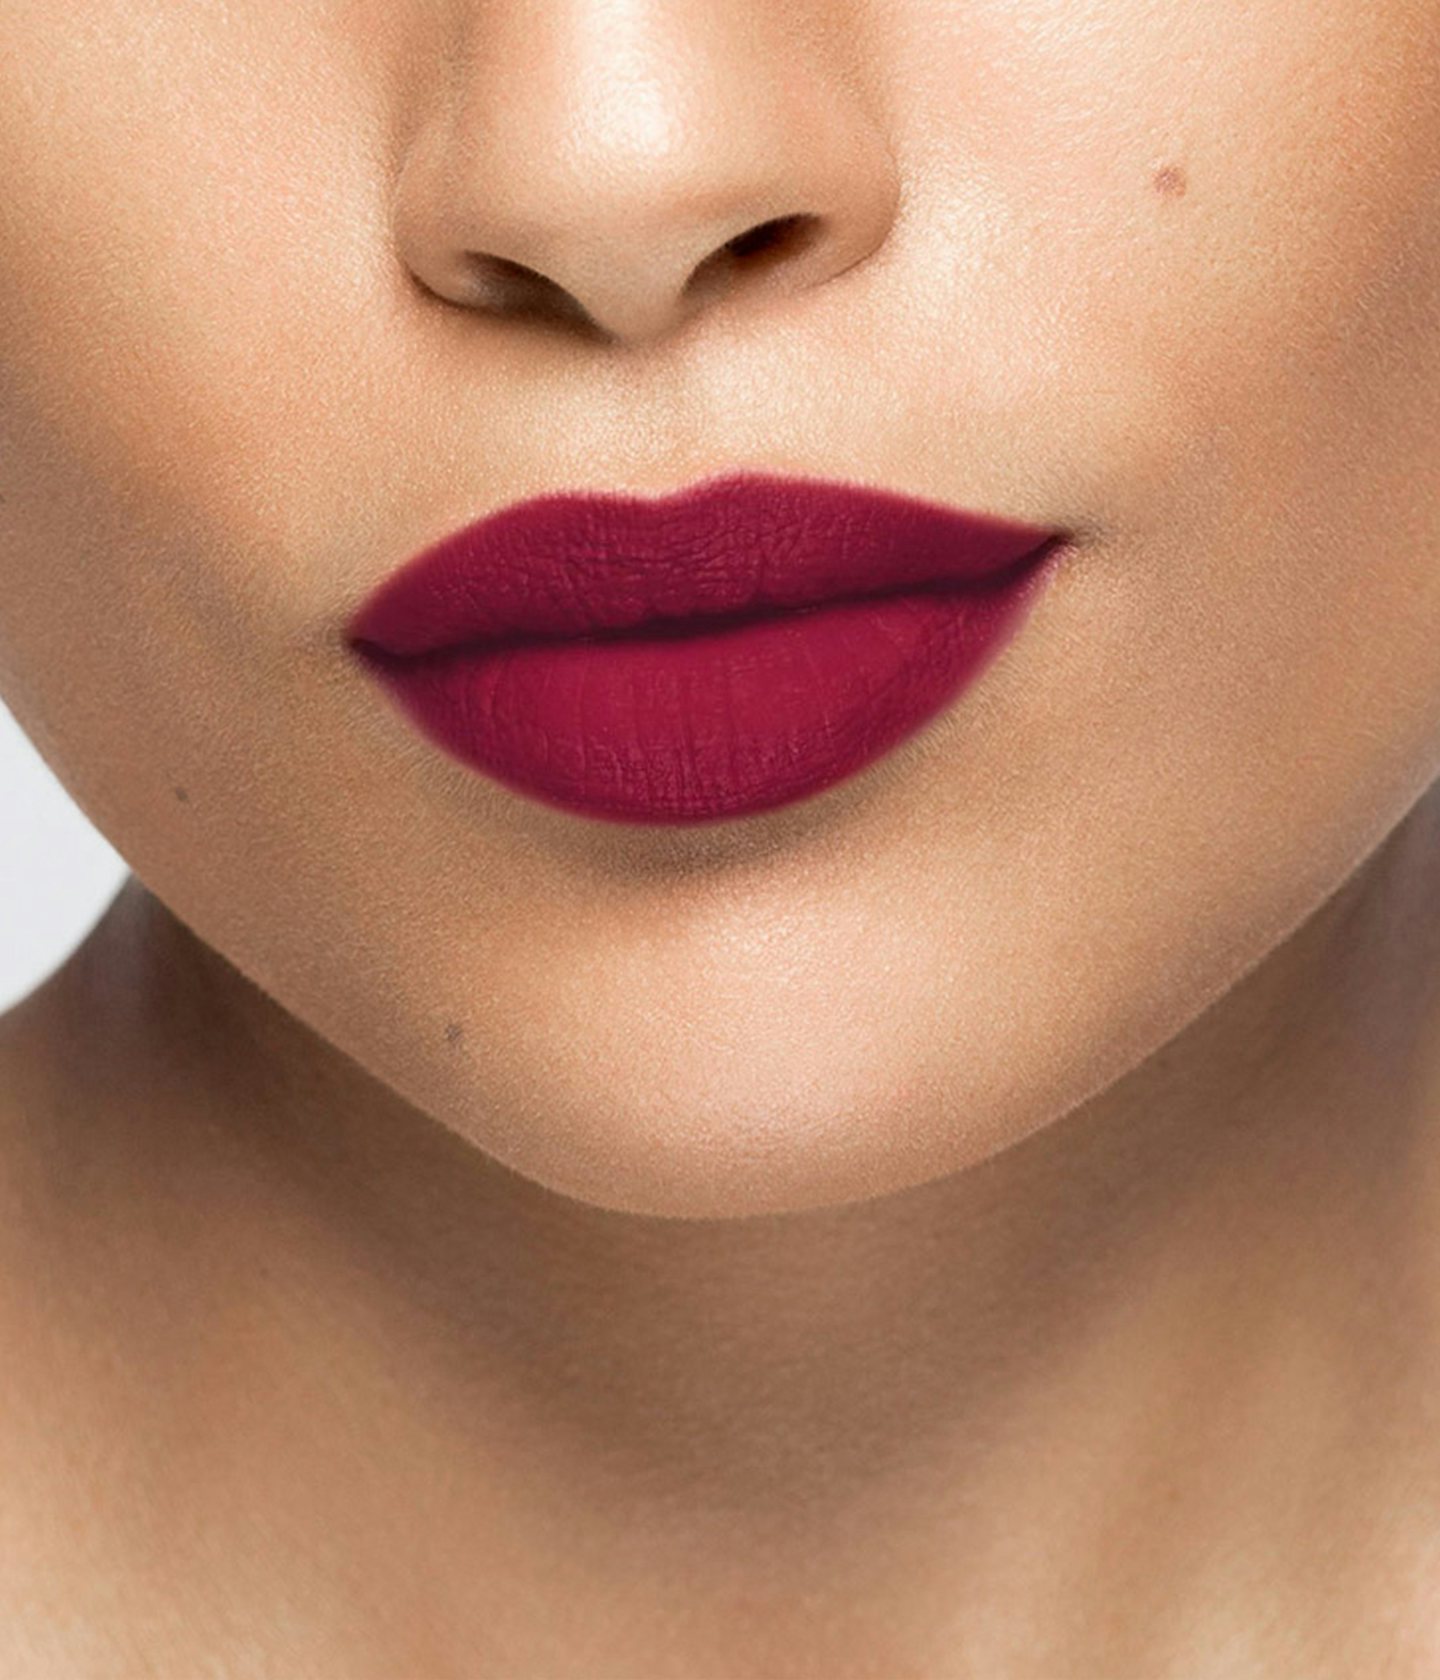 La bouche rouge Plum lipstick shade on the lips of a medium skin model